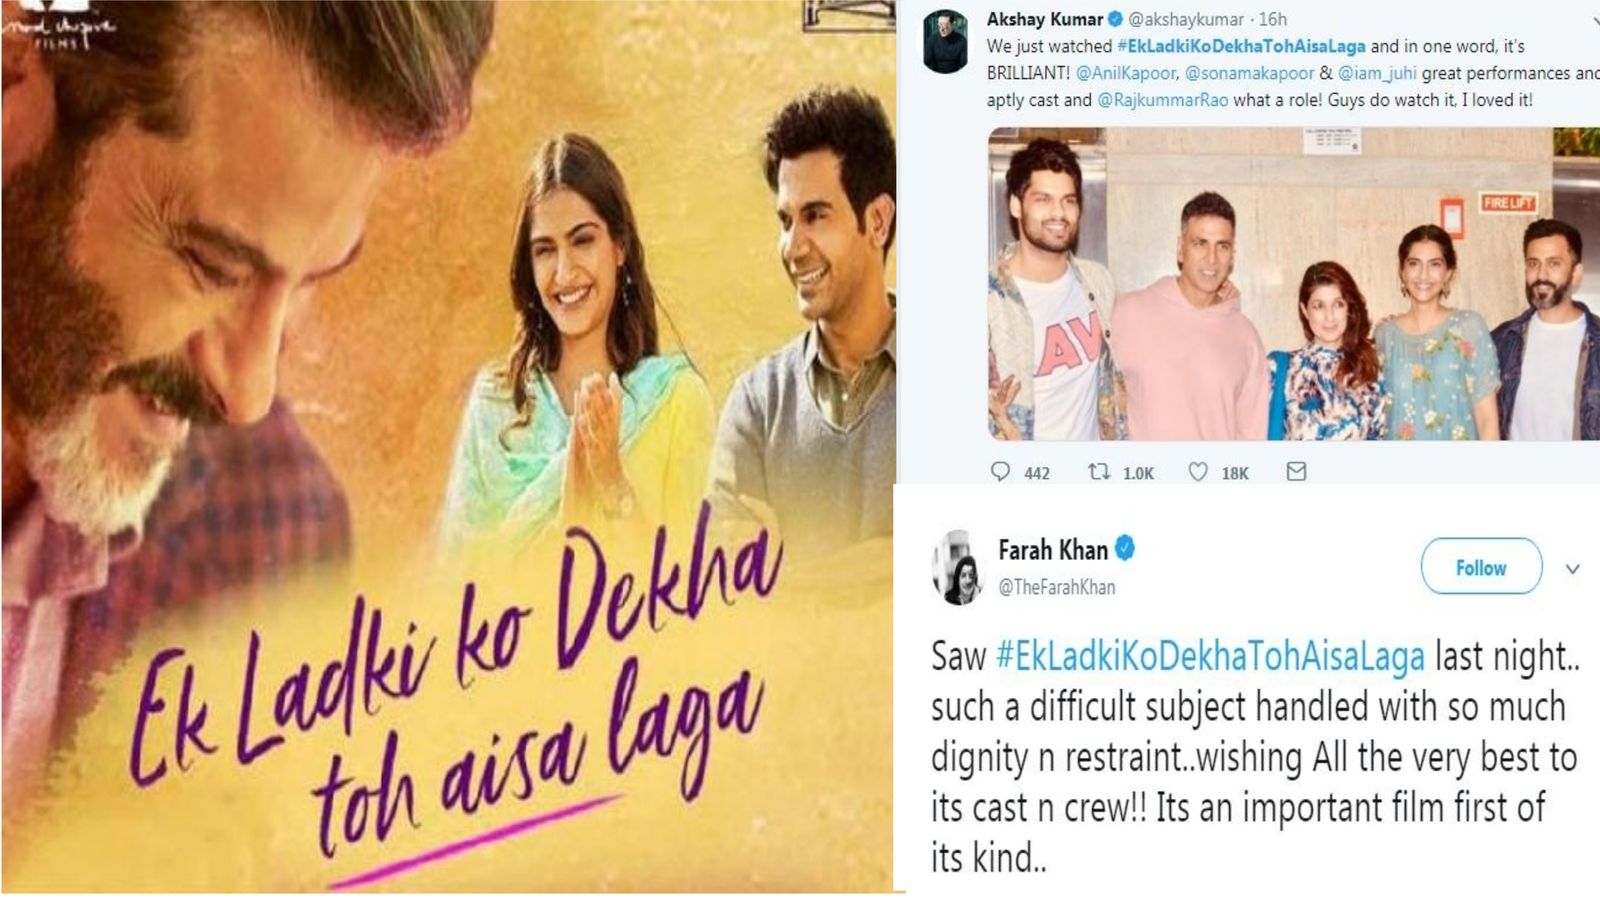 Bollywood Celebs Simply Can’t Stop Raving About Ek Ladki Ko Dekha To Aisa Laga On Twitter